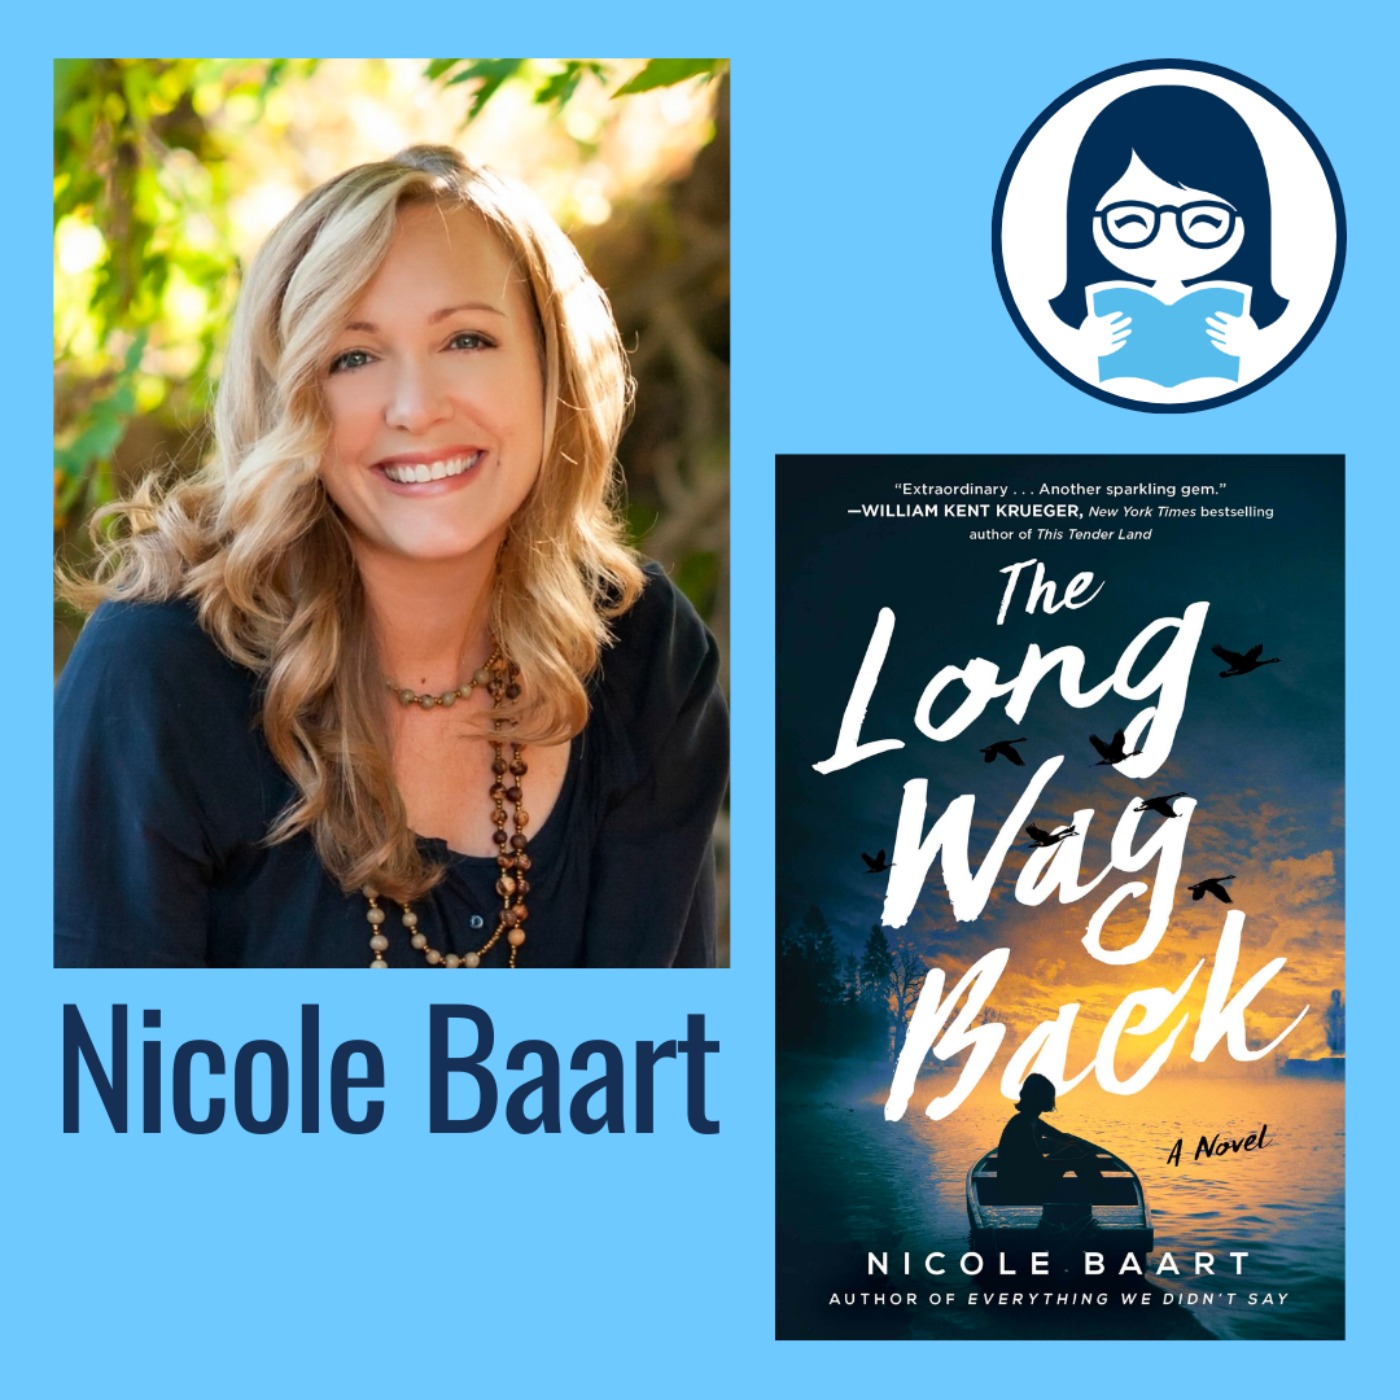 Nicole Baart, THE LONG WAY BACK